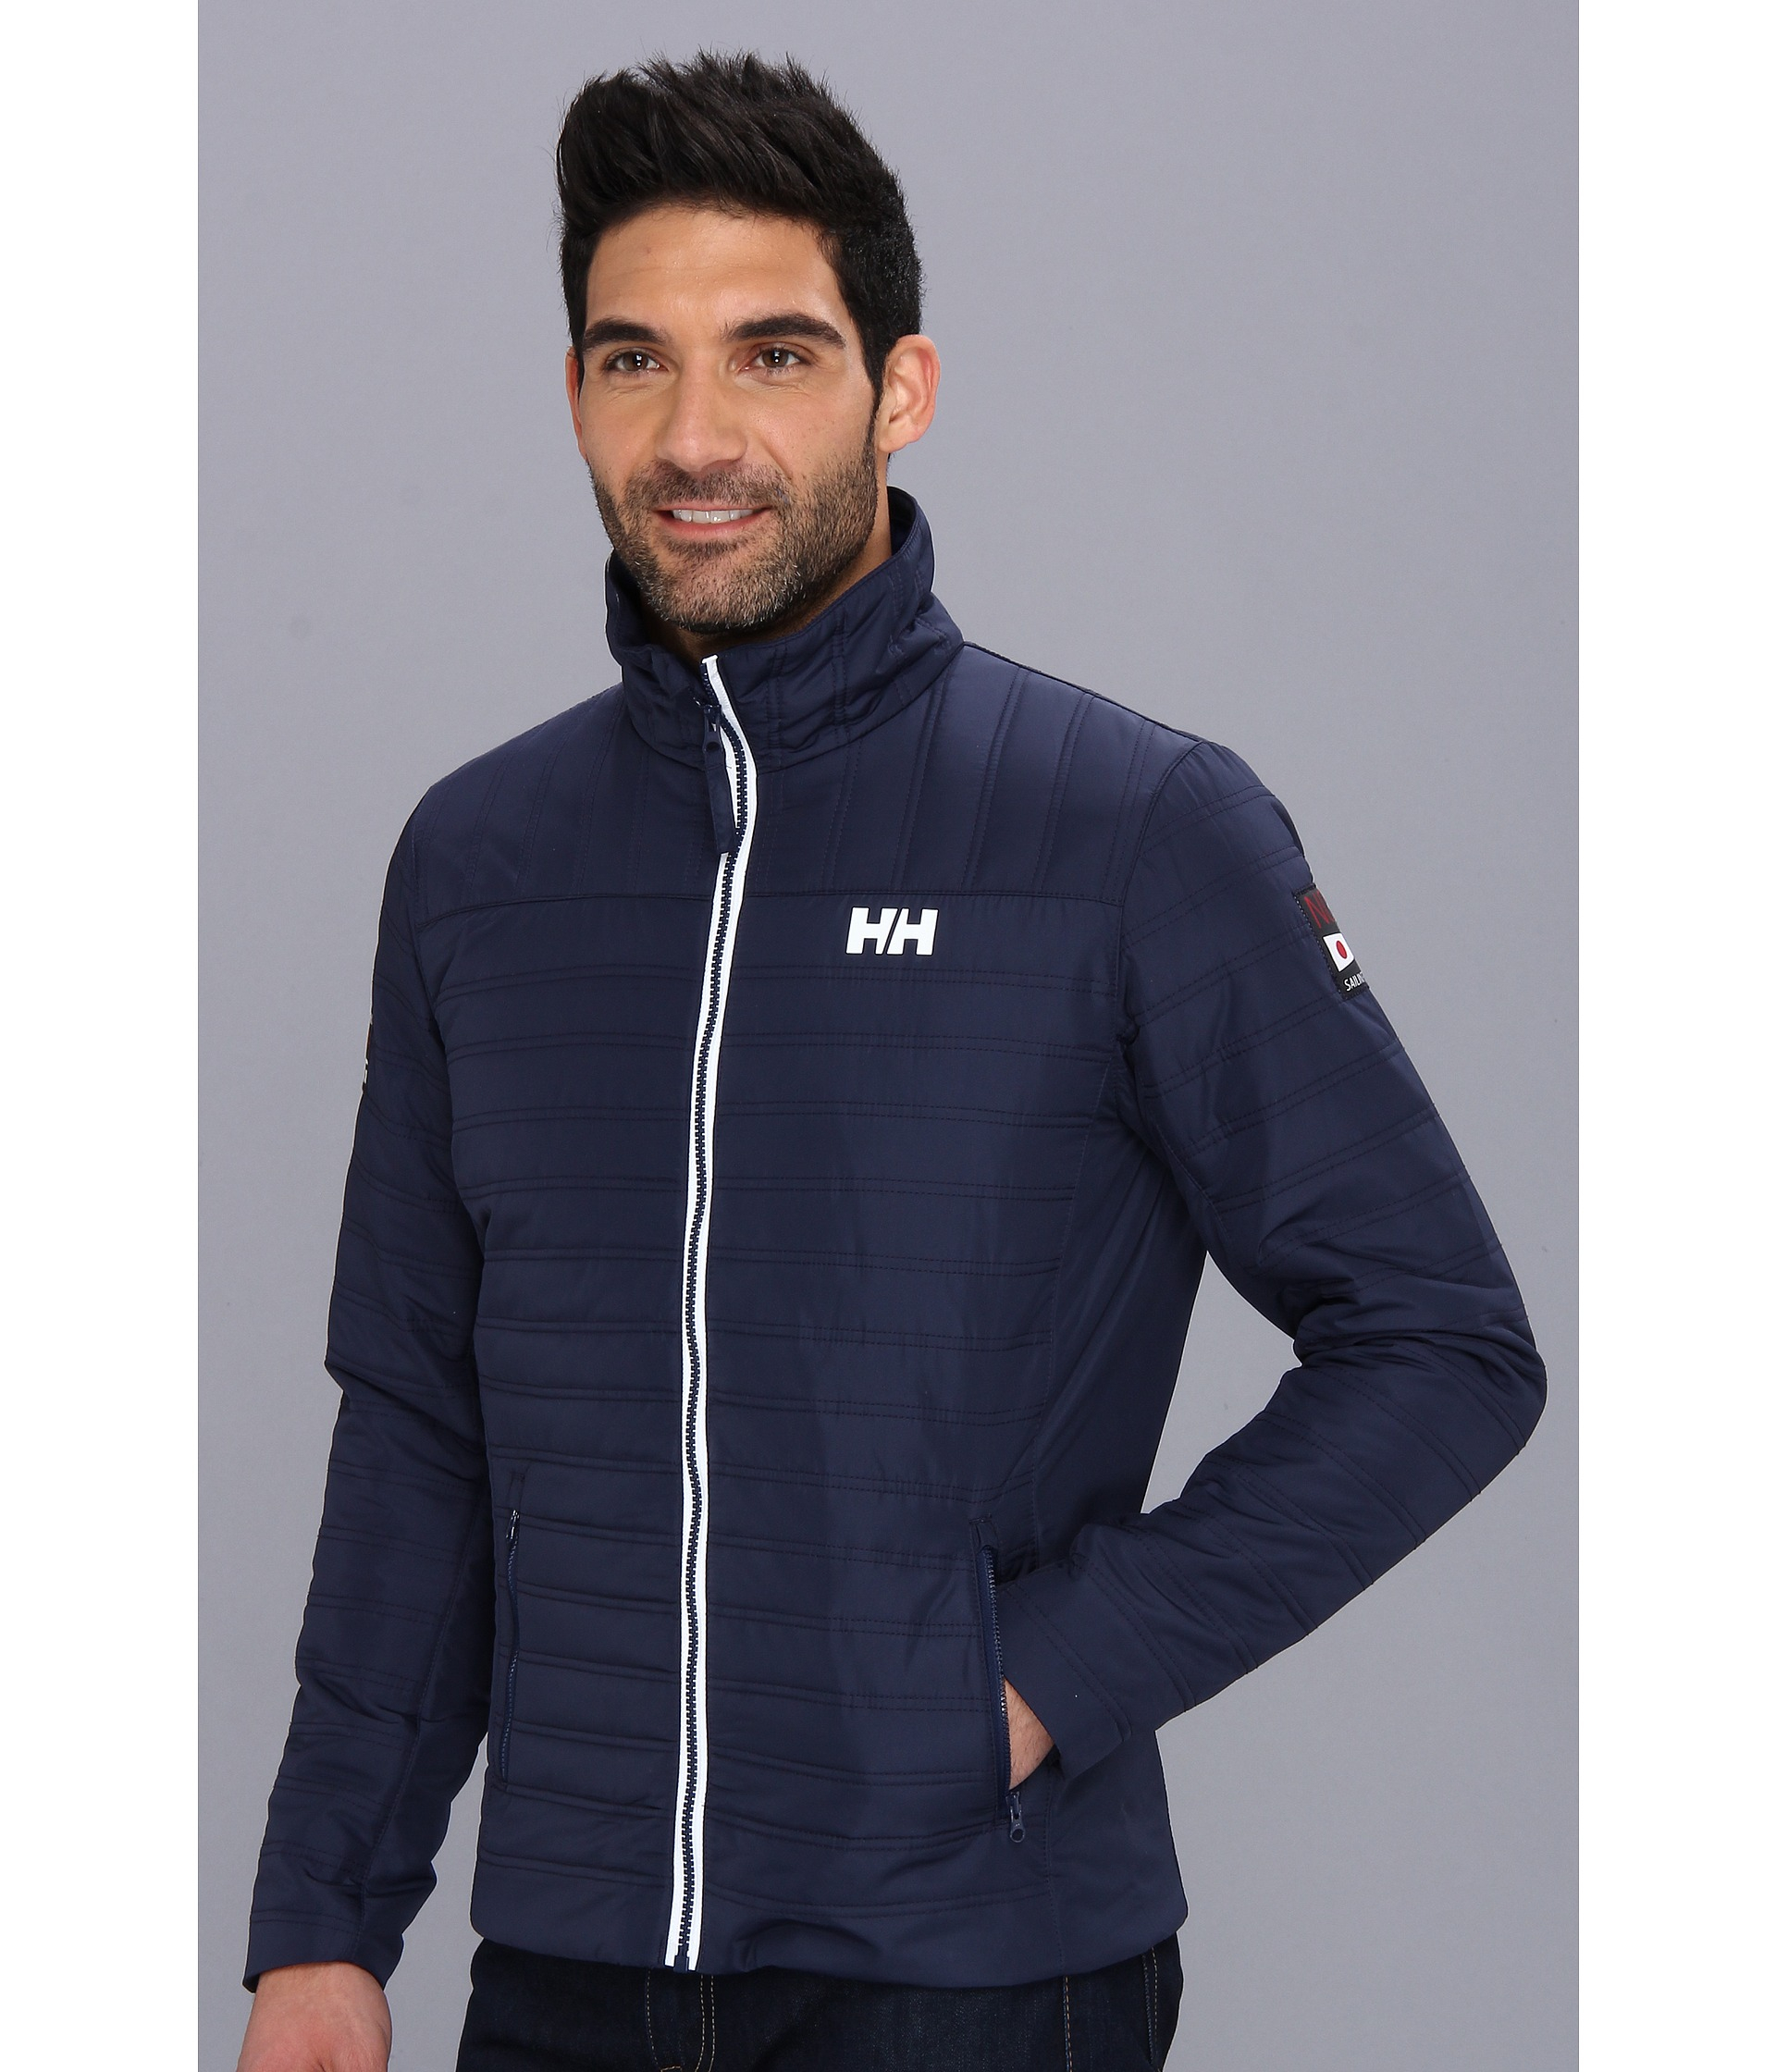 Helly Hansen Marstrand Jacket in Blue for Men - Lyst